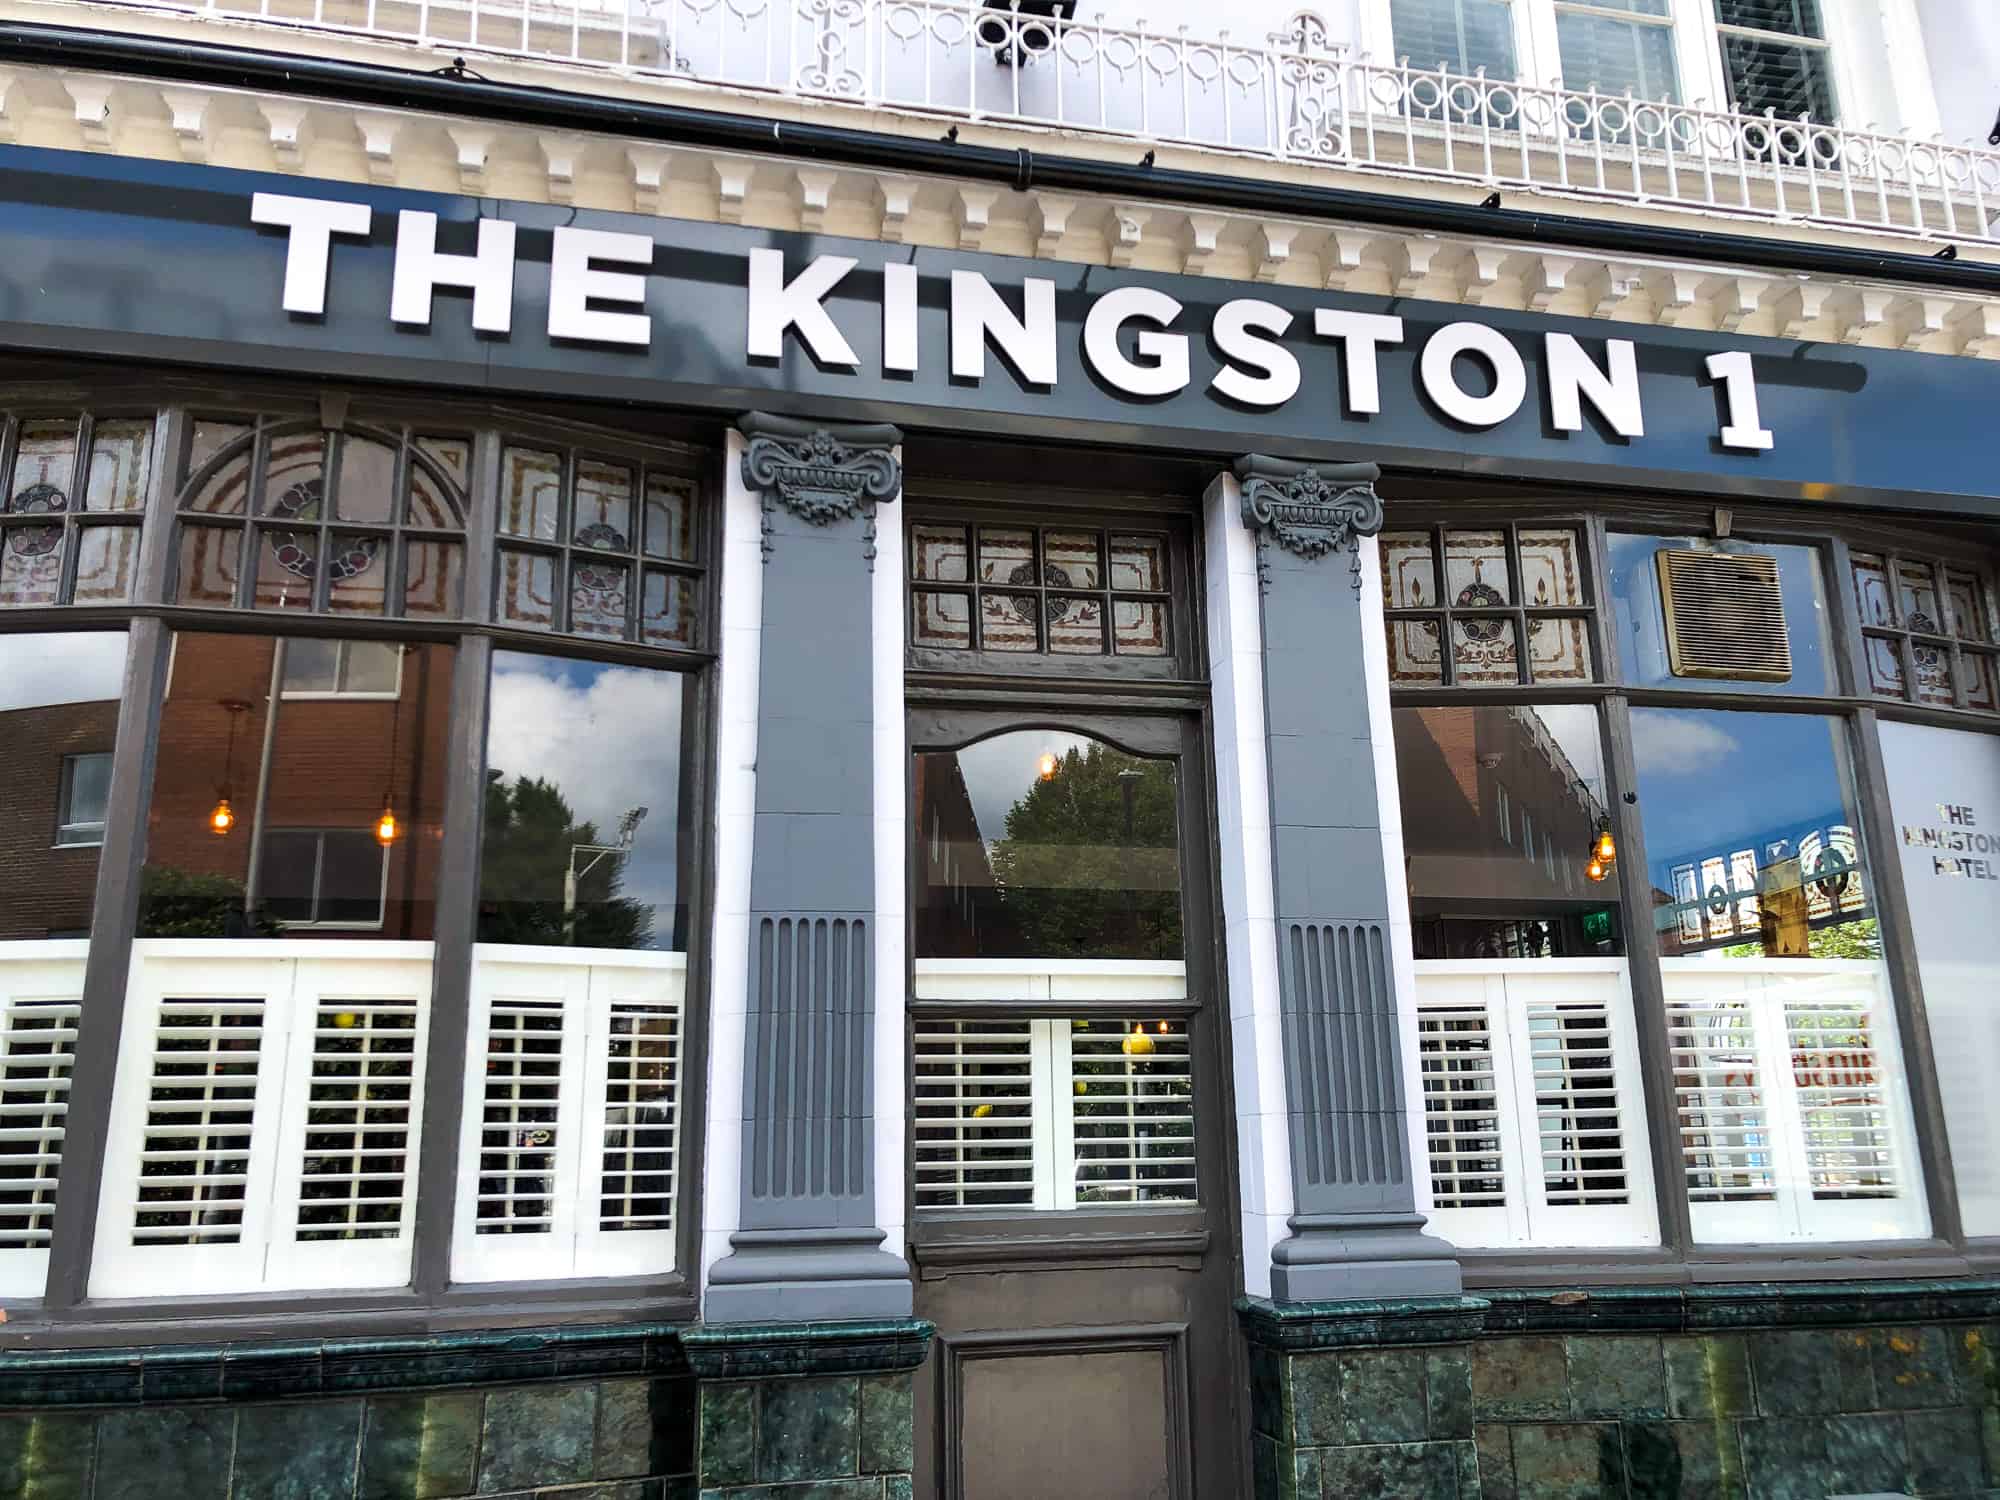 England - Kingston upon Thames - Exterior of Kingston 1 hotel